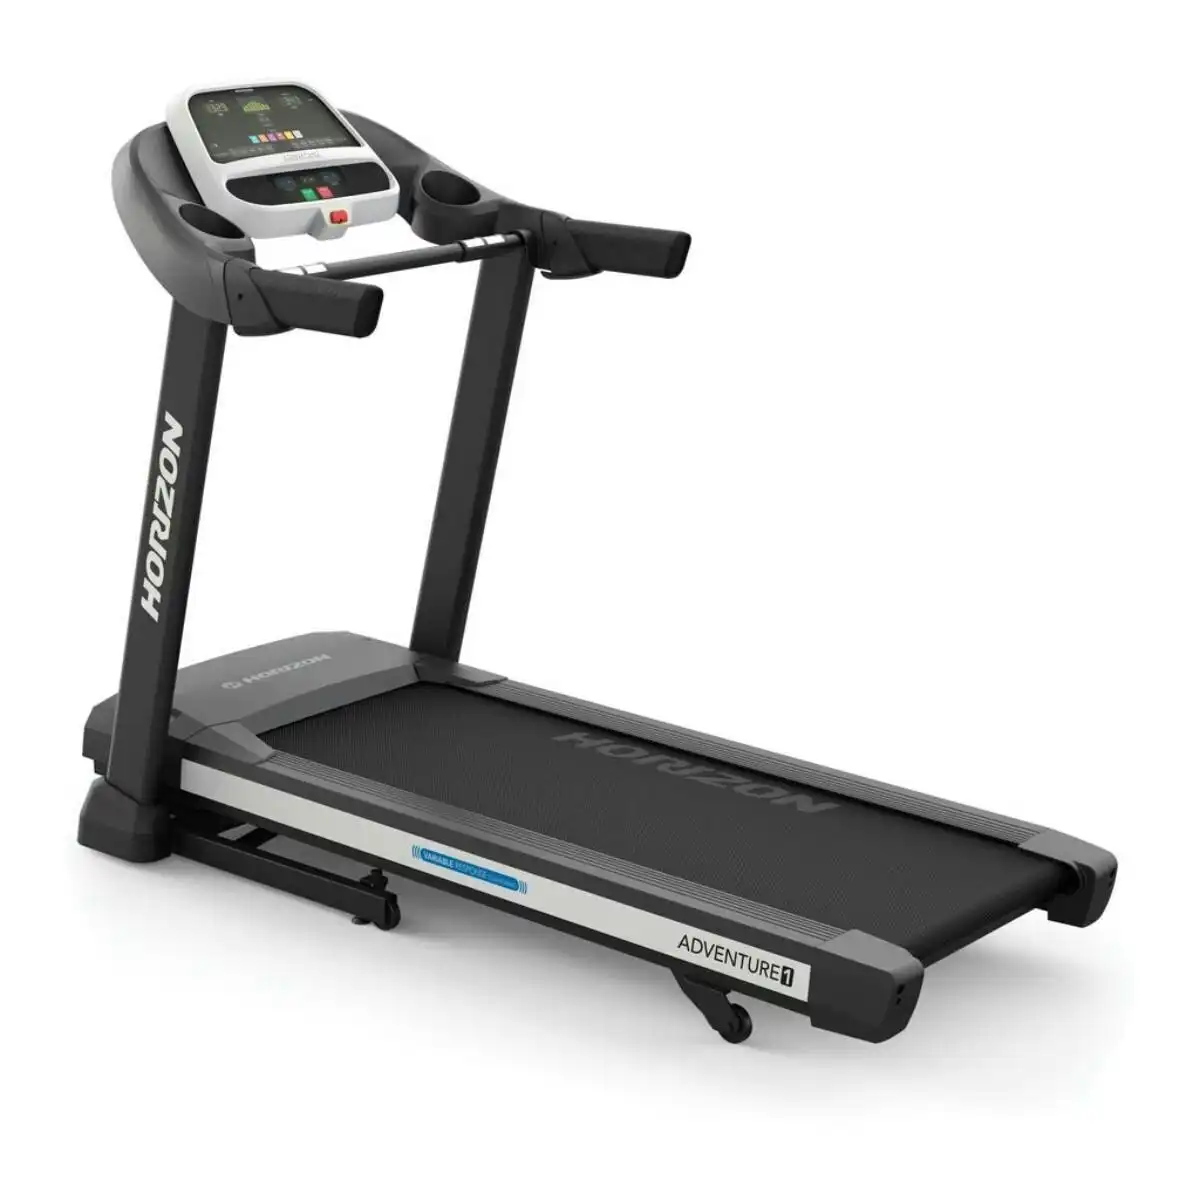 Horizon Fitness Horizon Adventure 1 Treadmill